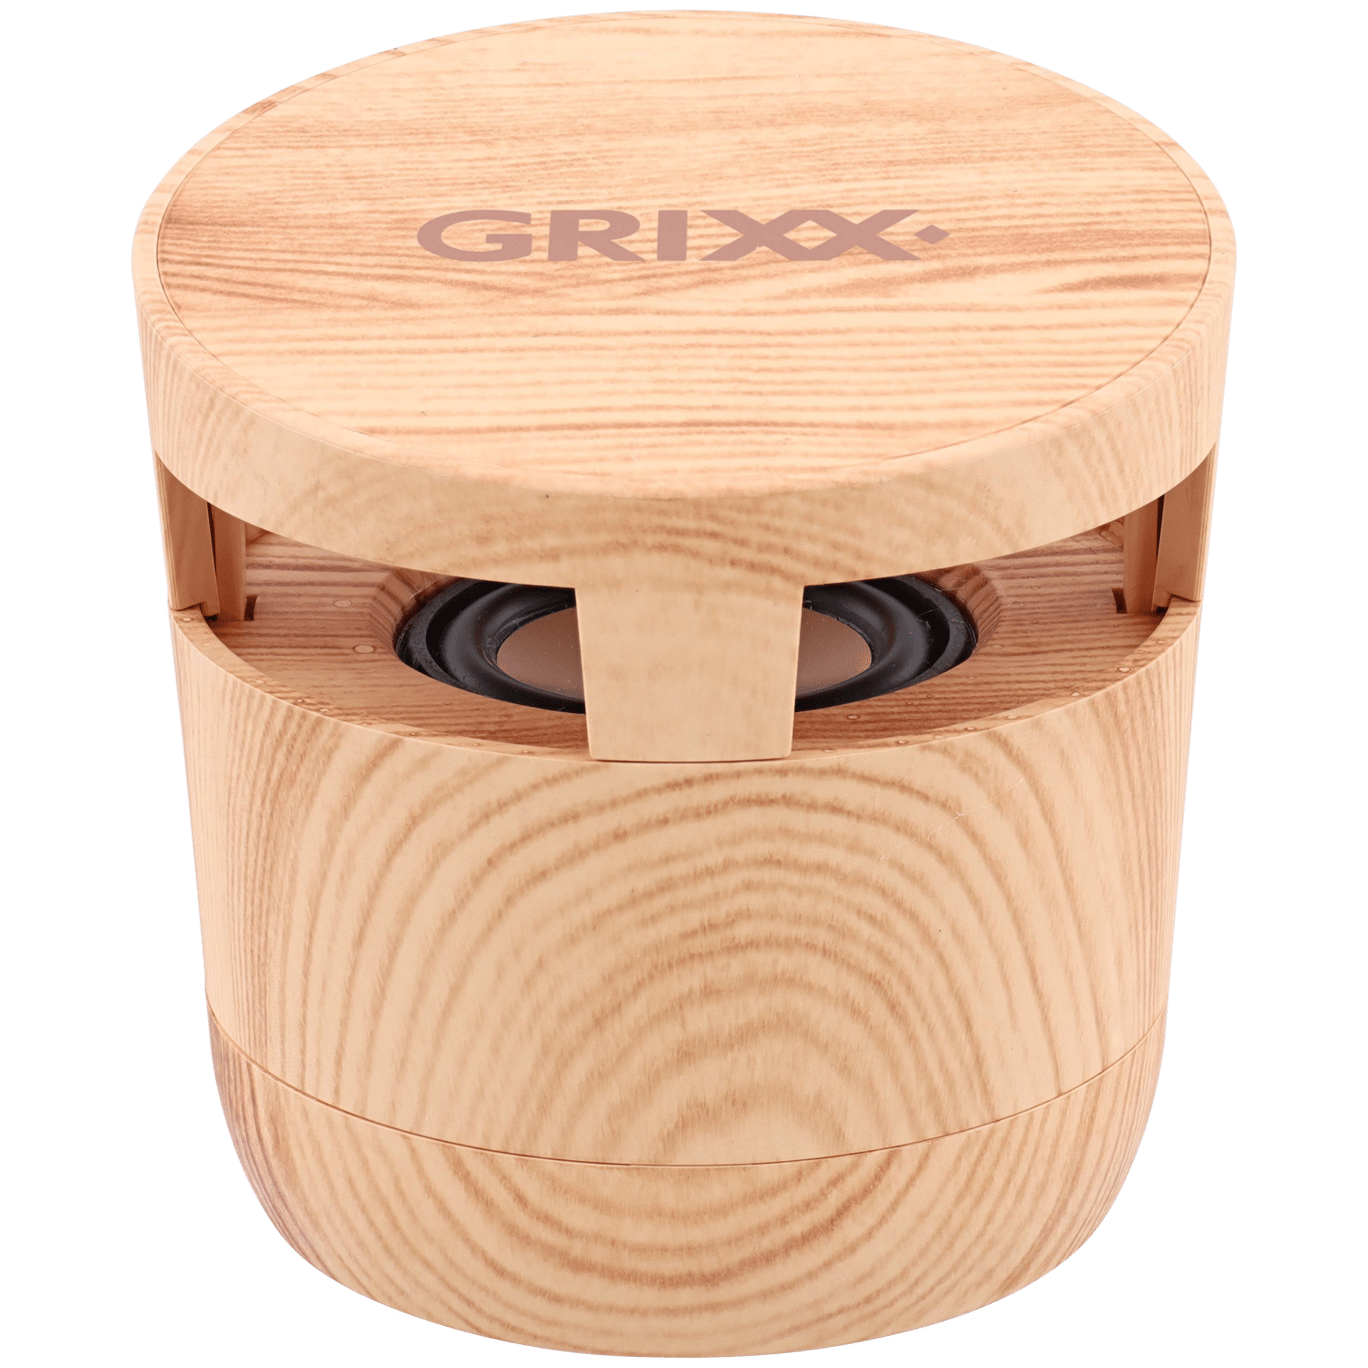 avontuur Bedankt lager Grixx houten bluetooth speaker | Action.com